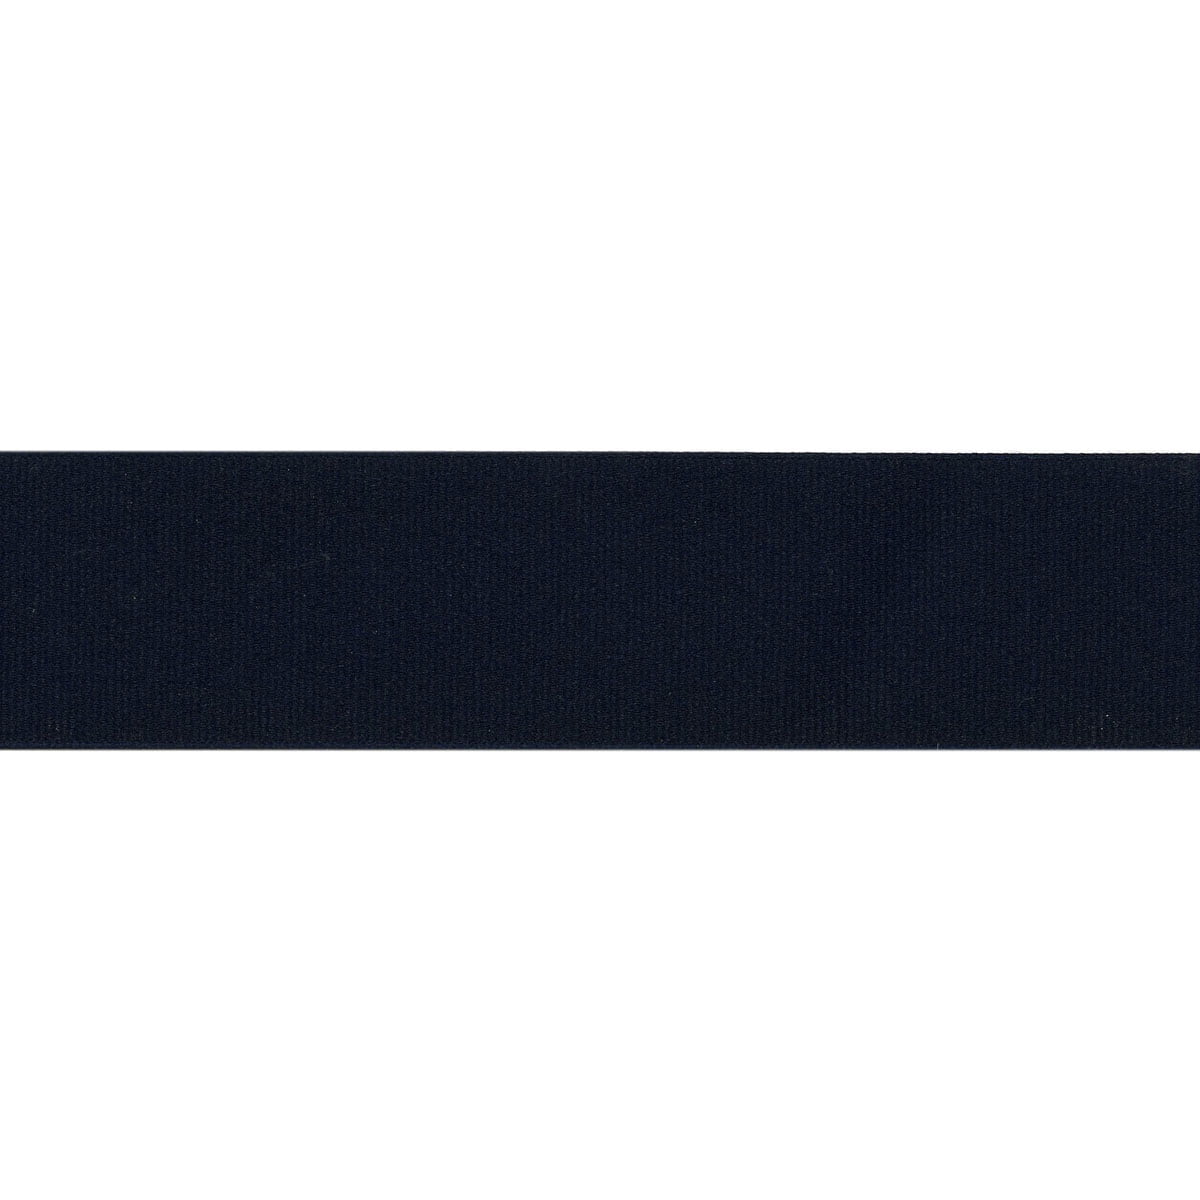 Offray Ribbon, Navy Blue 1 1/2 inch Grosgrain Polyester Ribbon, 12 feet 